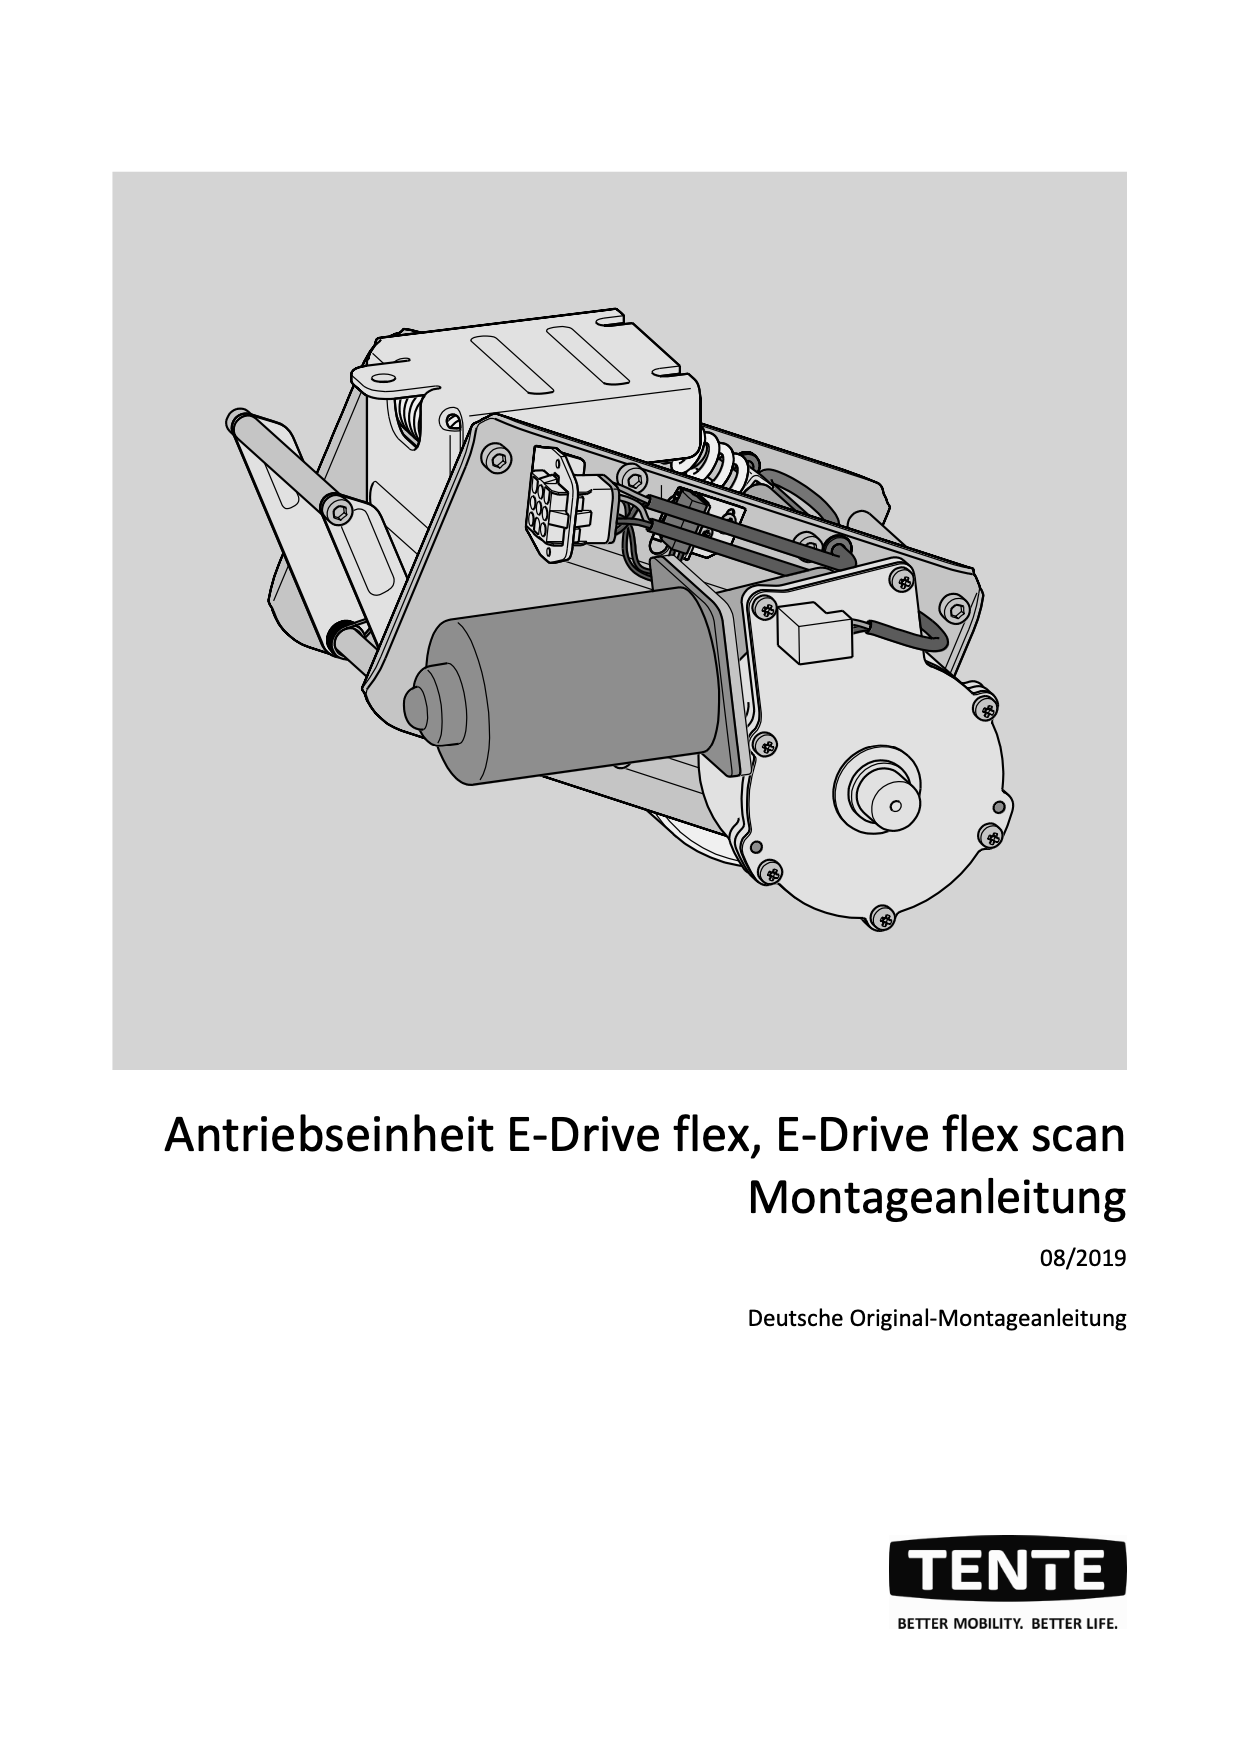 Installation Instructions E-Drive and E-Drive flex scan